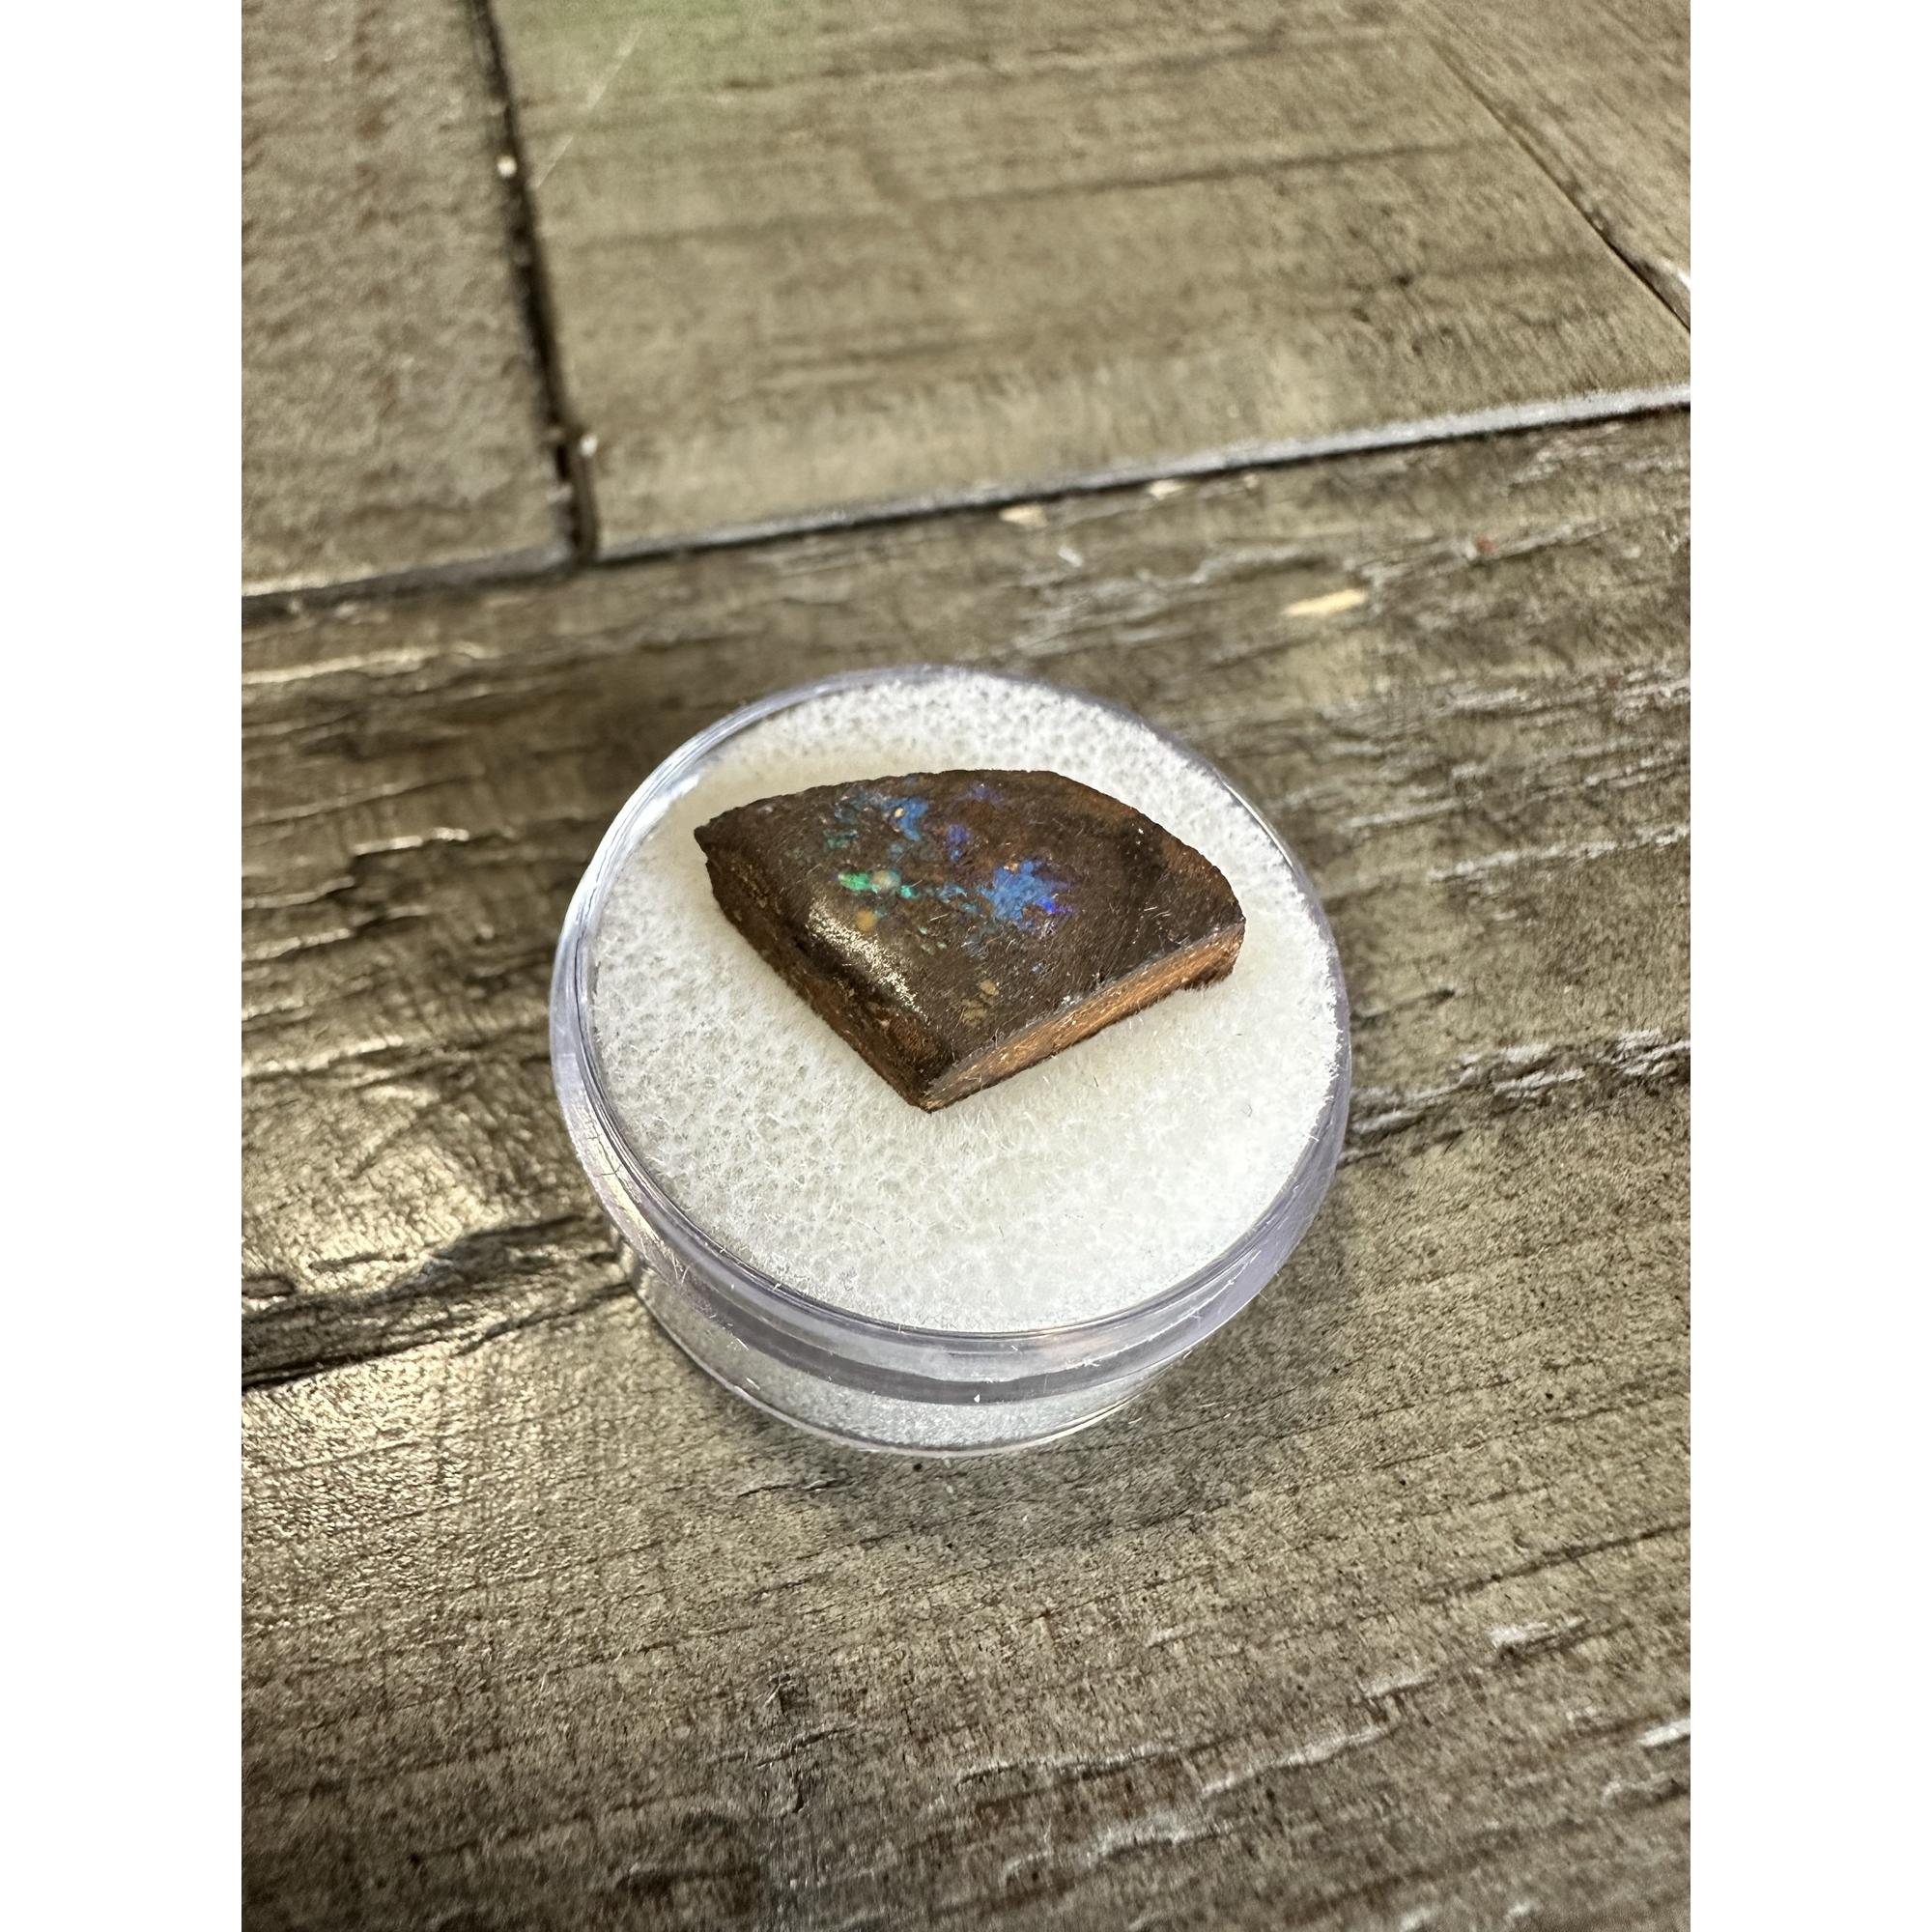 Opal, boulder Australia, over 1 inch Prehistoric Online